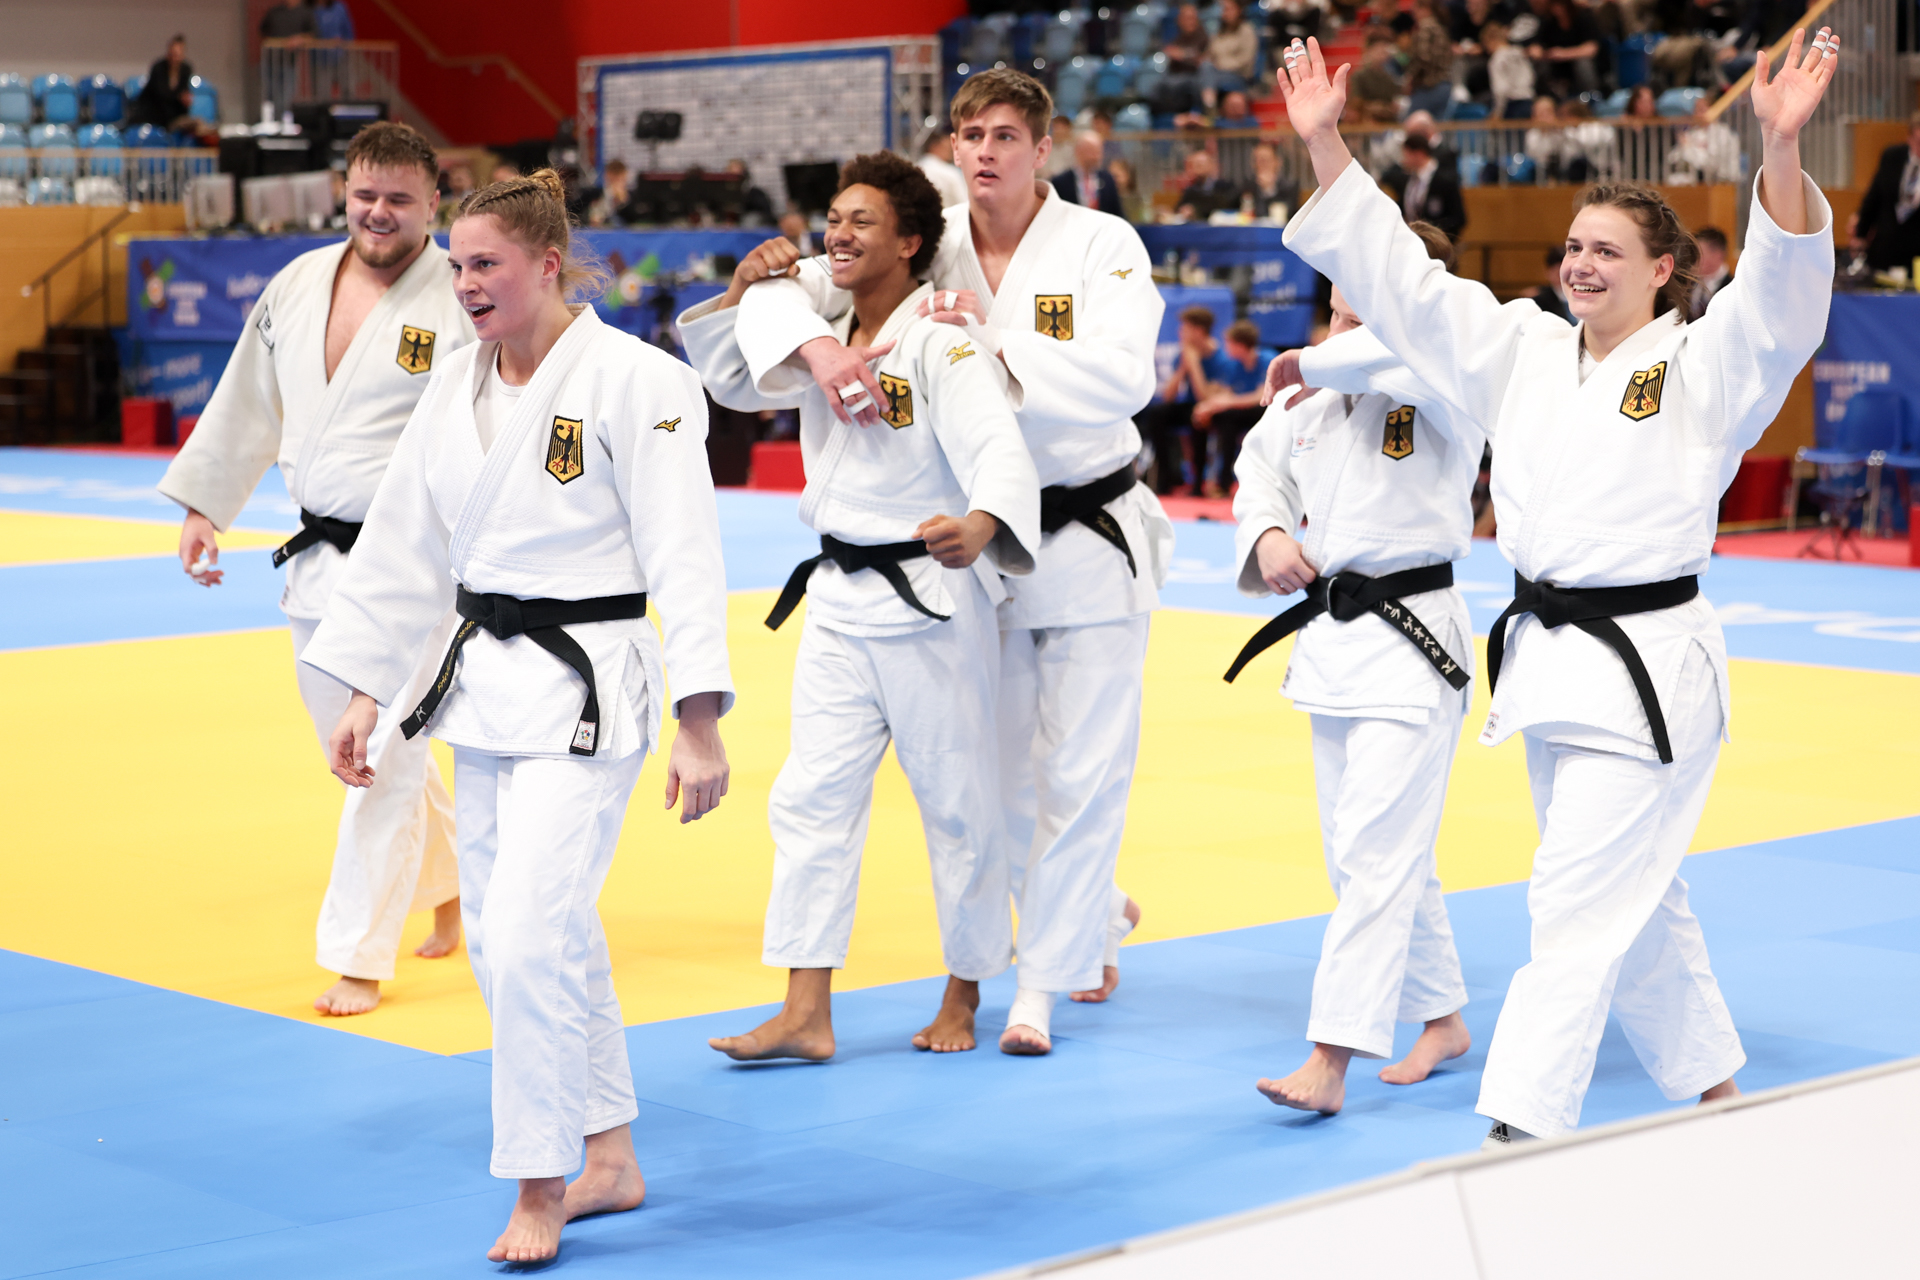 Dit is een DEUTSCH-NEDERLANDSE FINALE – Europese Judo Unie